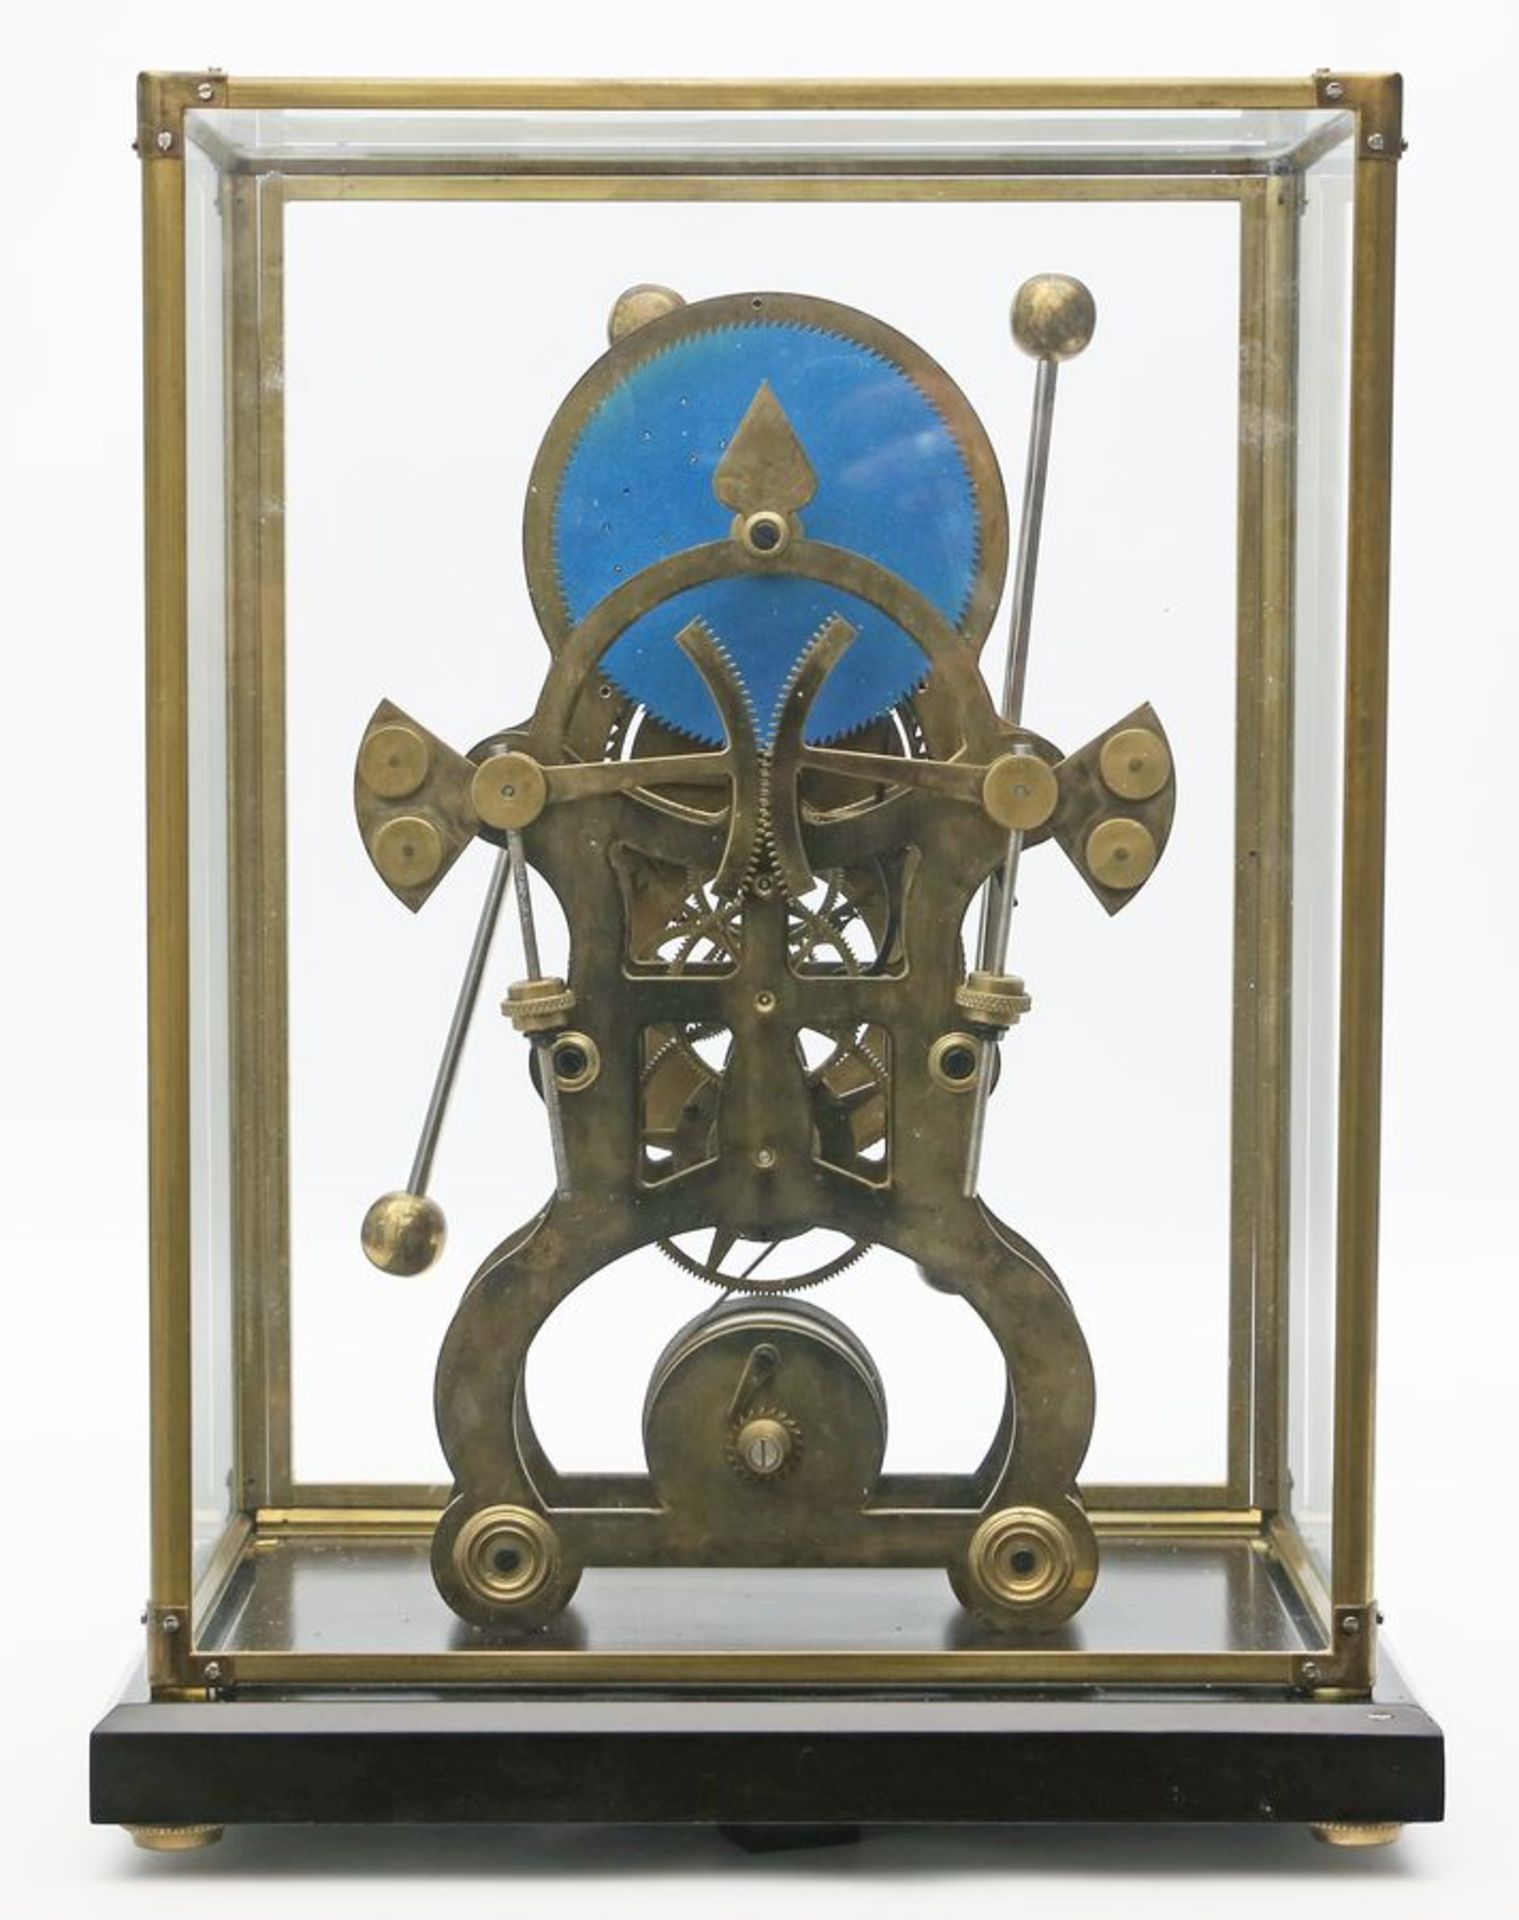 Skeletuhr "John Harrison Moonphase Sea Clock", Sinclair Harding. - Image 3 of 3